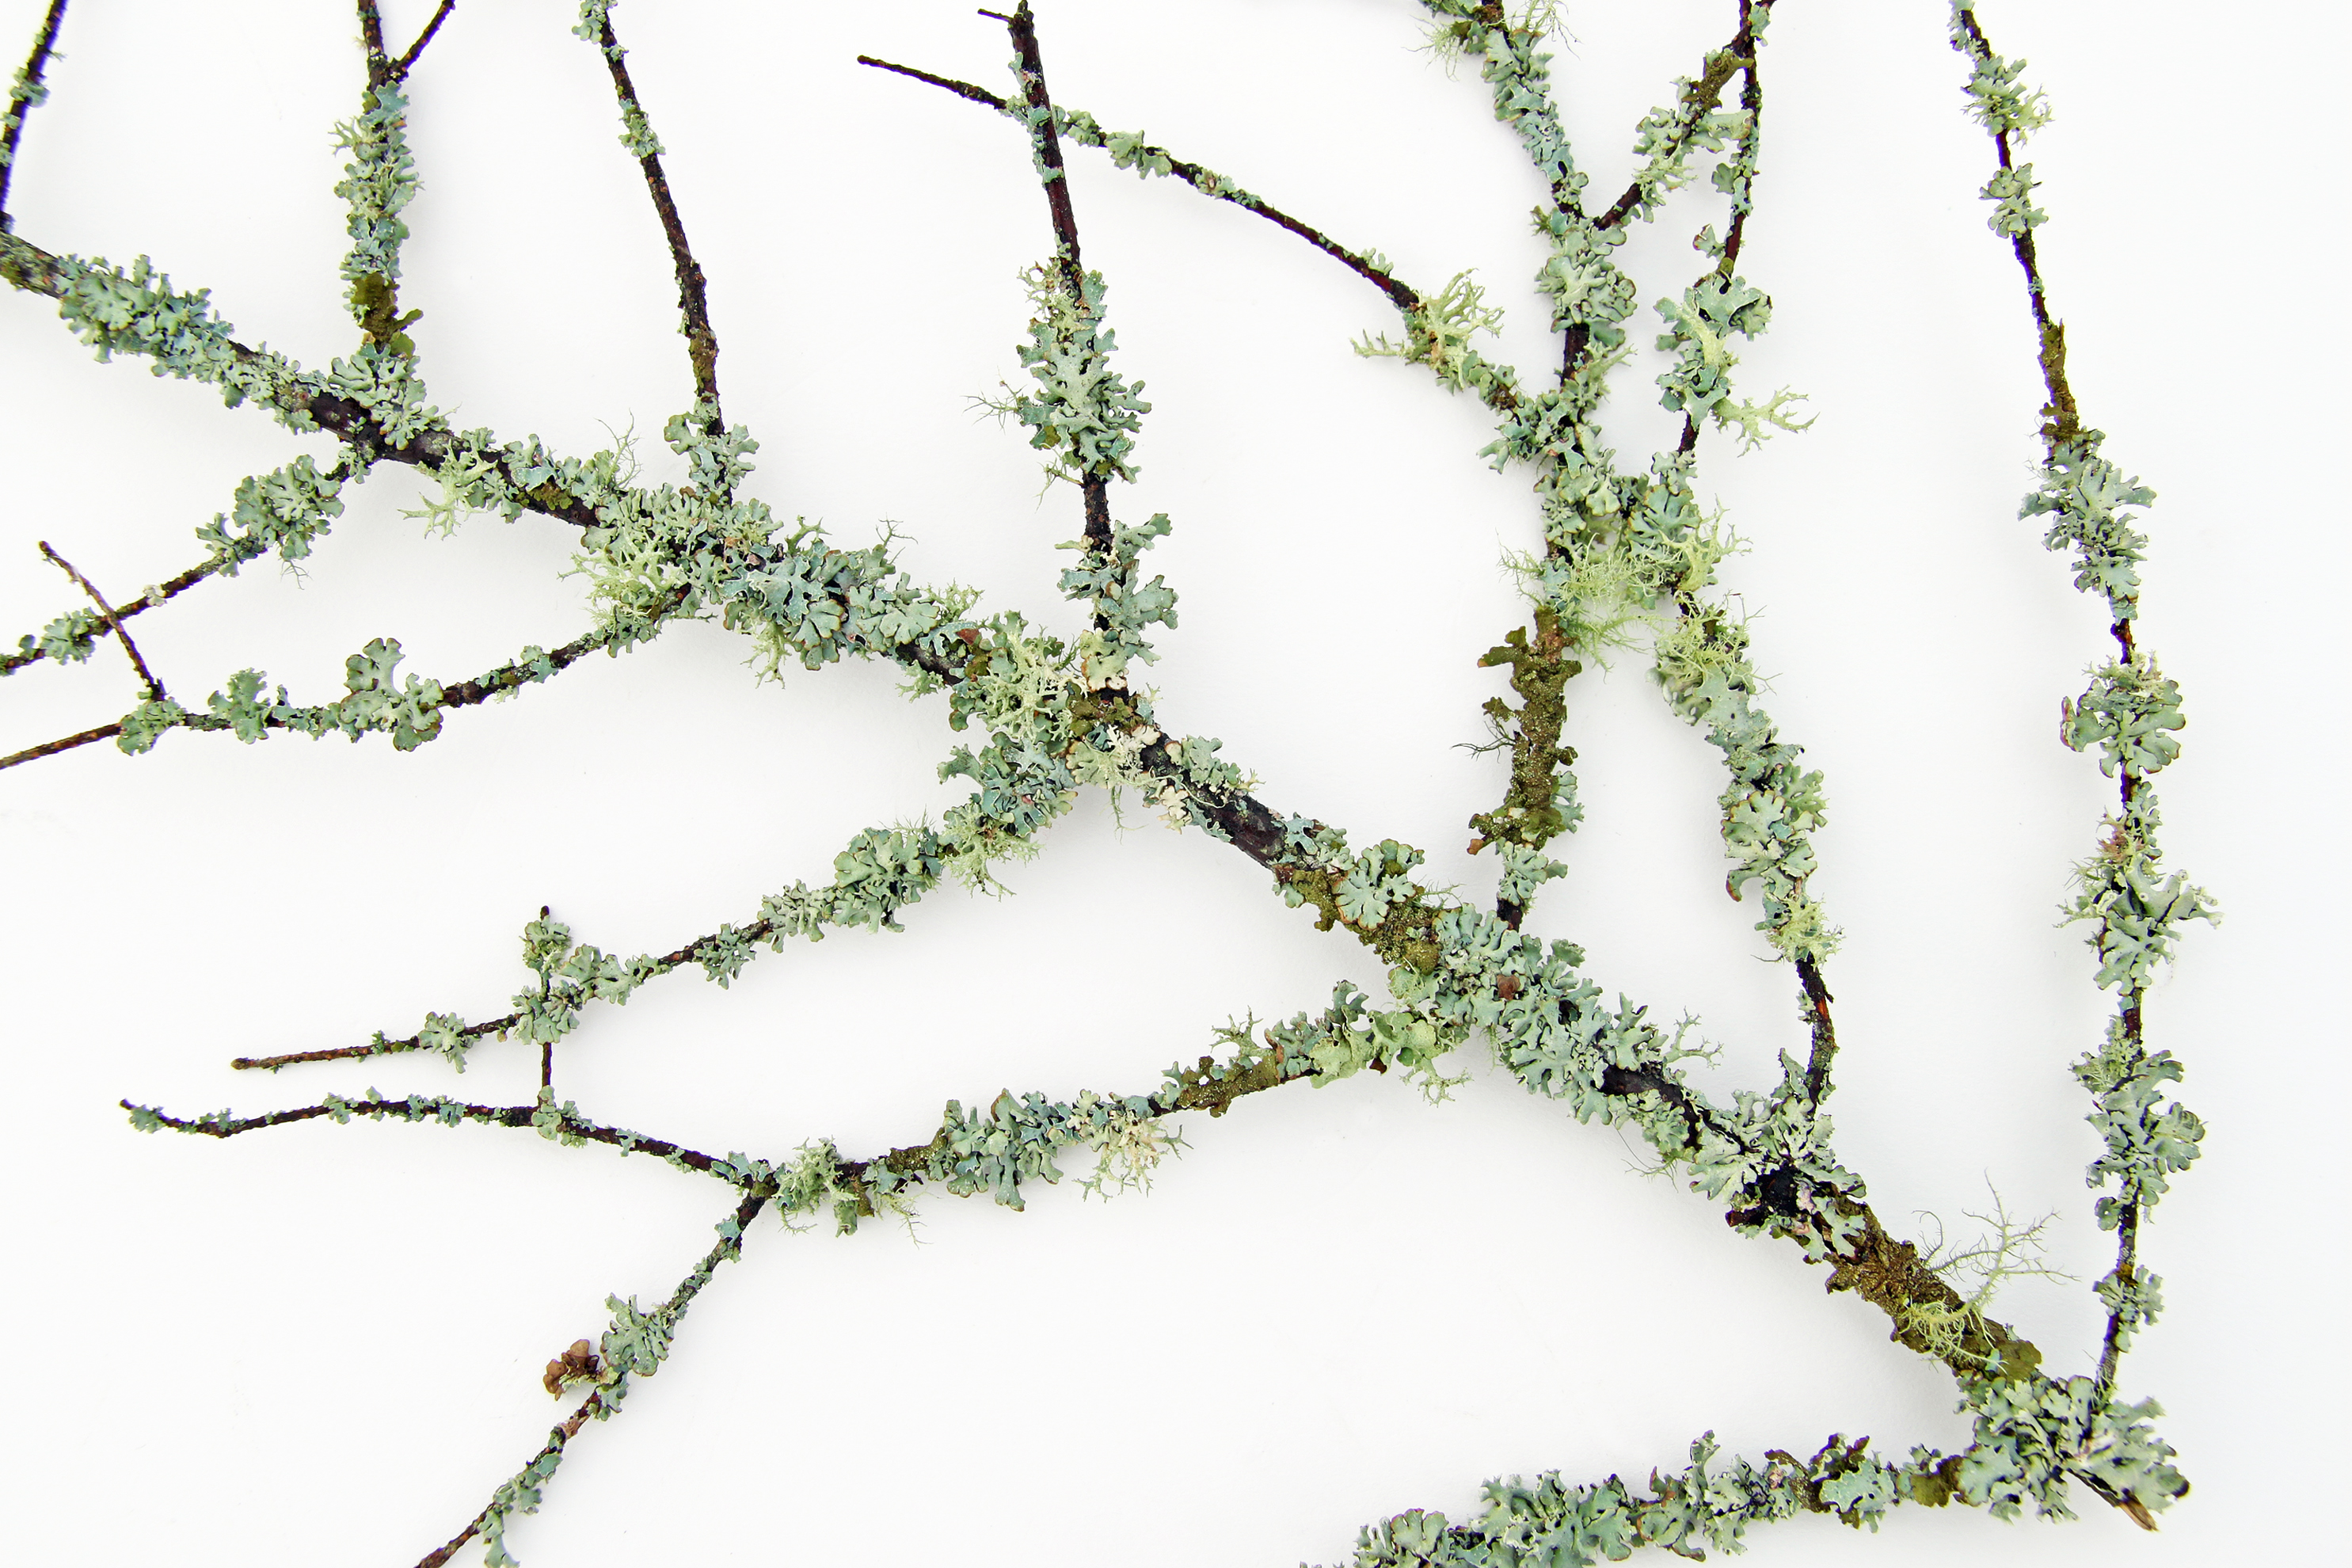 green shield lichen